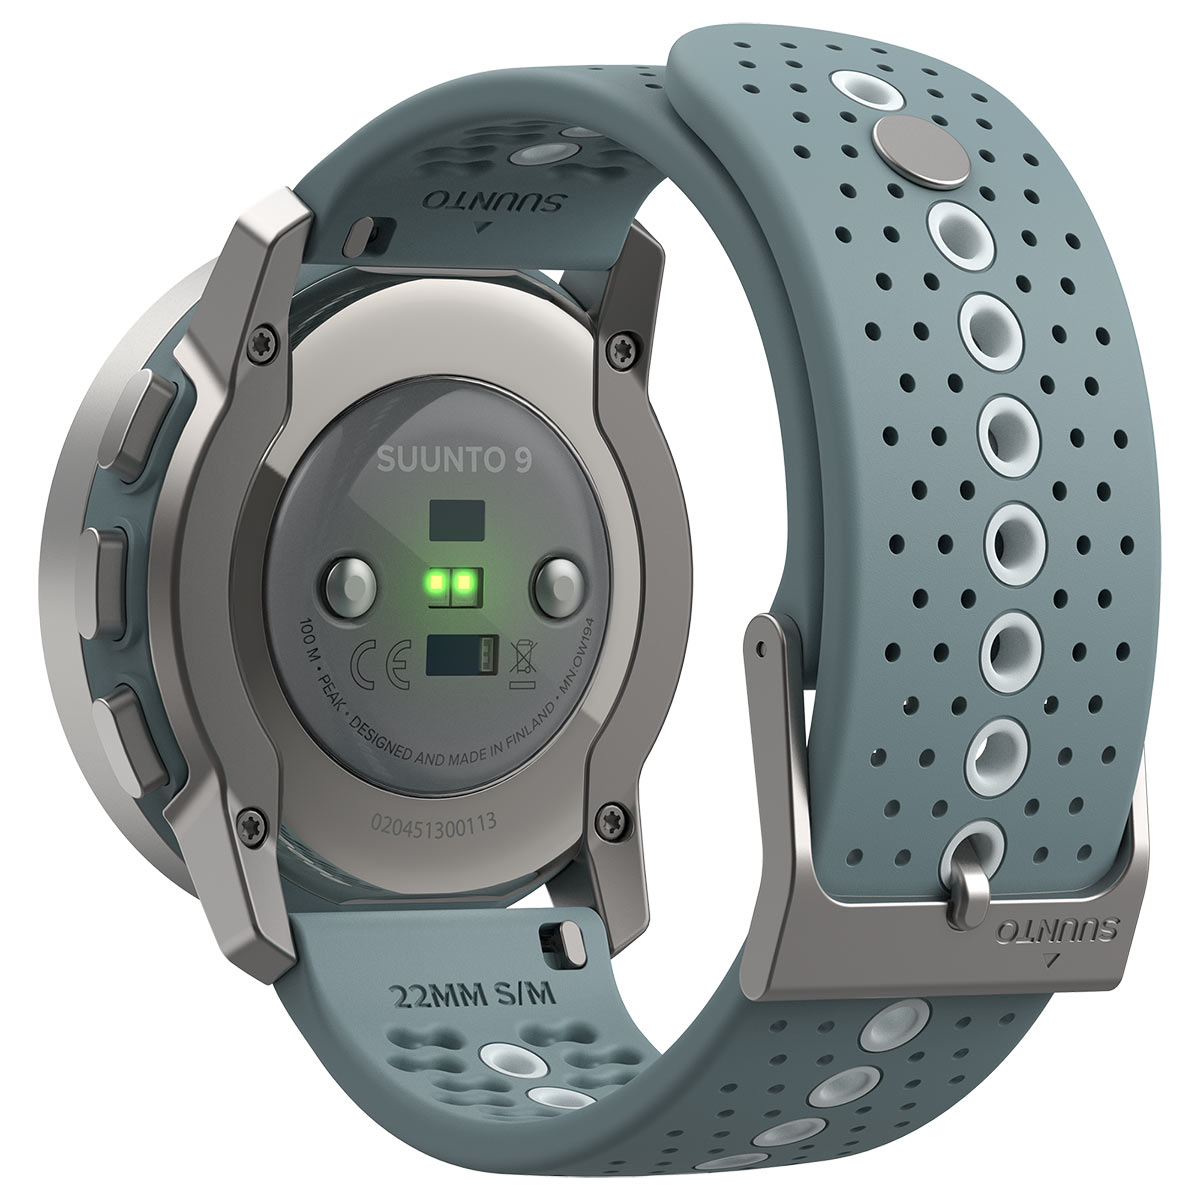 new suunto 9 peak gps multisport watch has built in heart rate and blood oxygen sensors